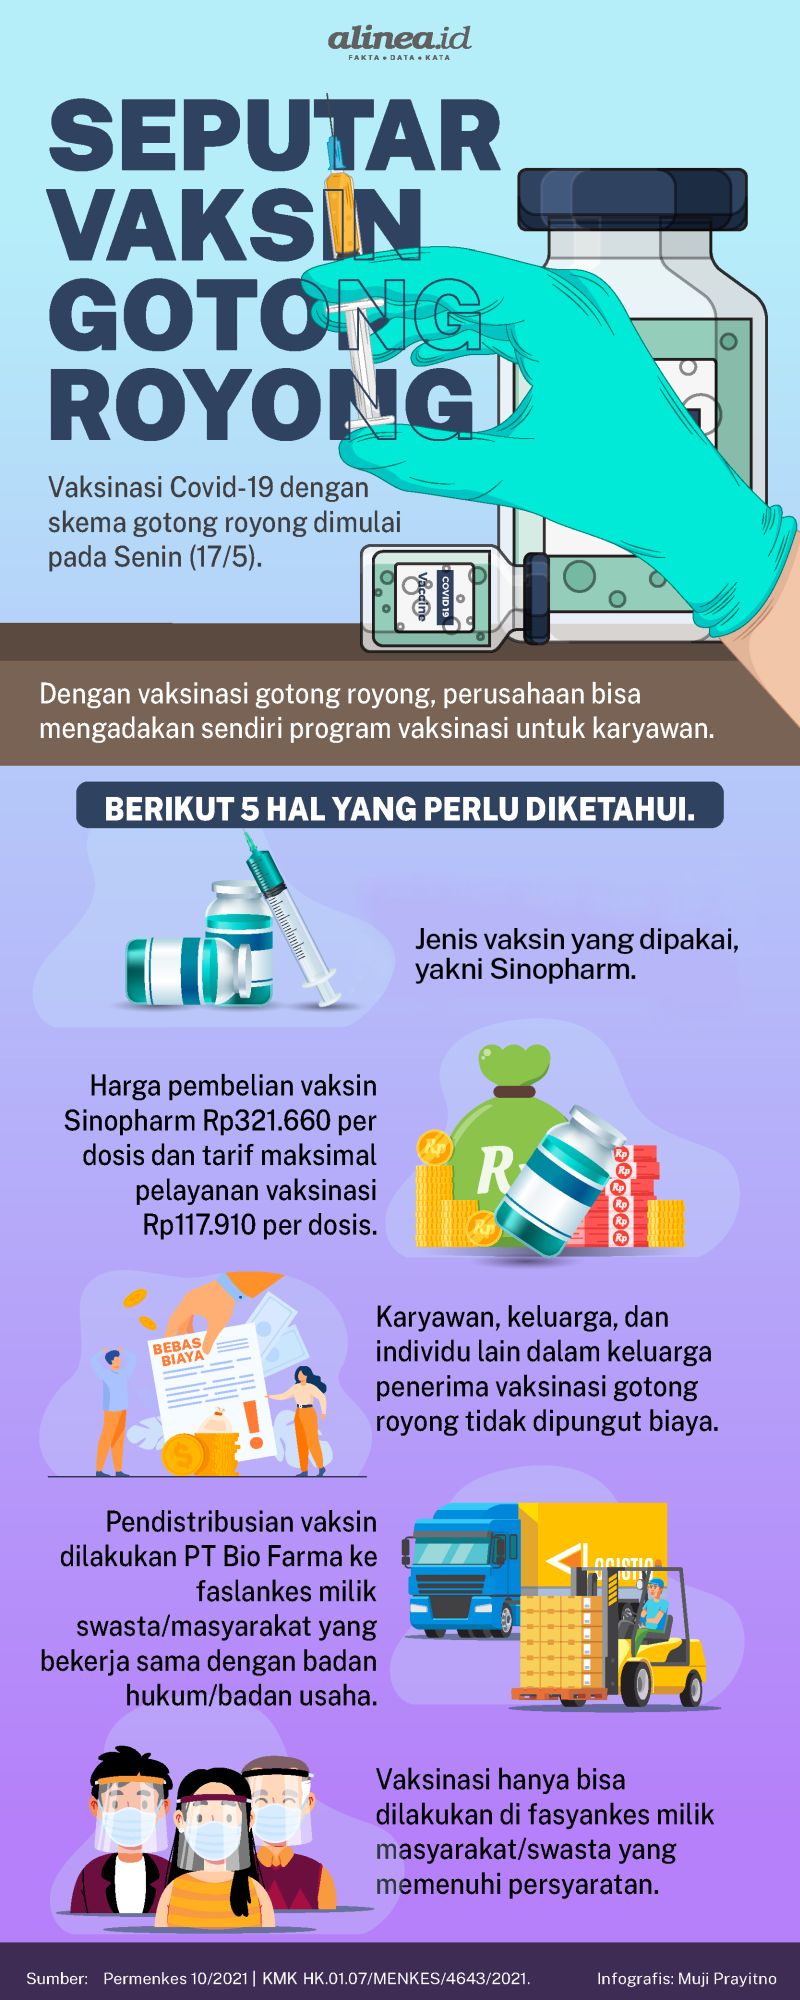 Infografik Alinea.id/Muji Prayitno.